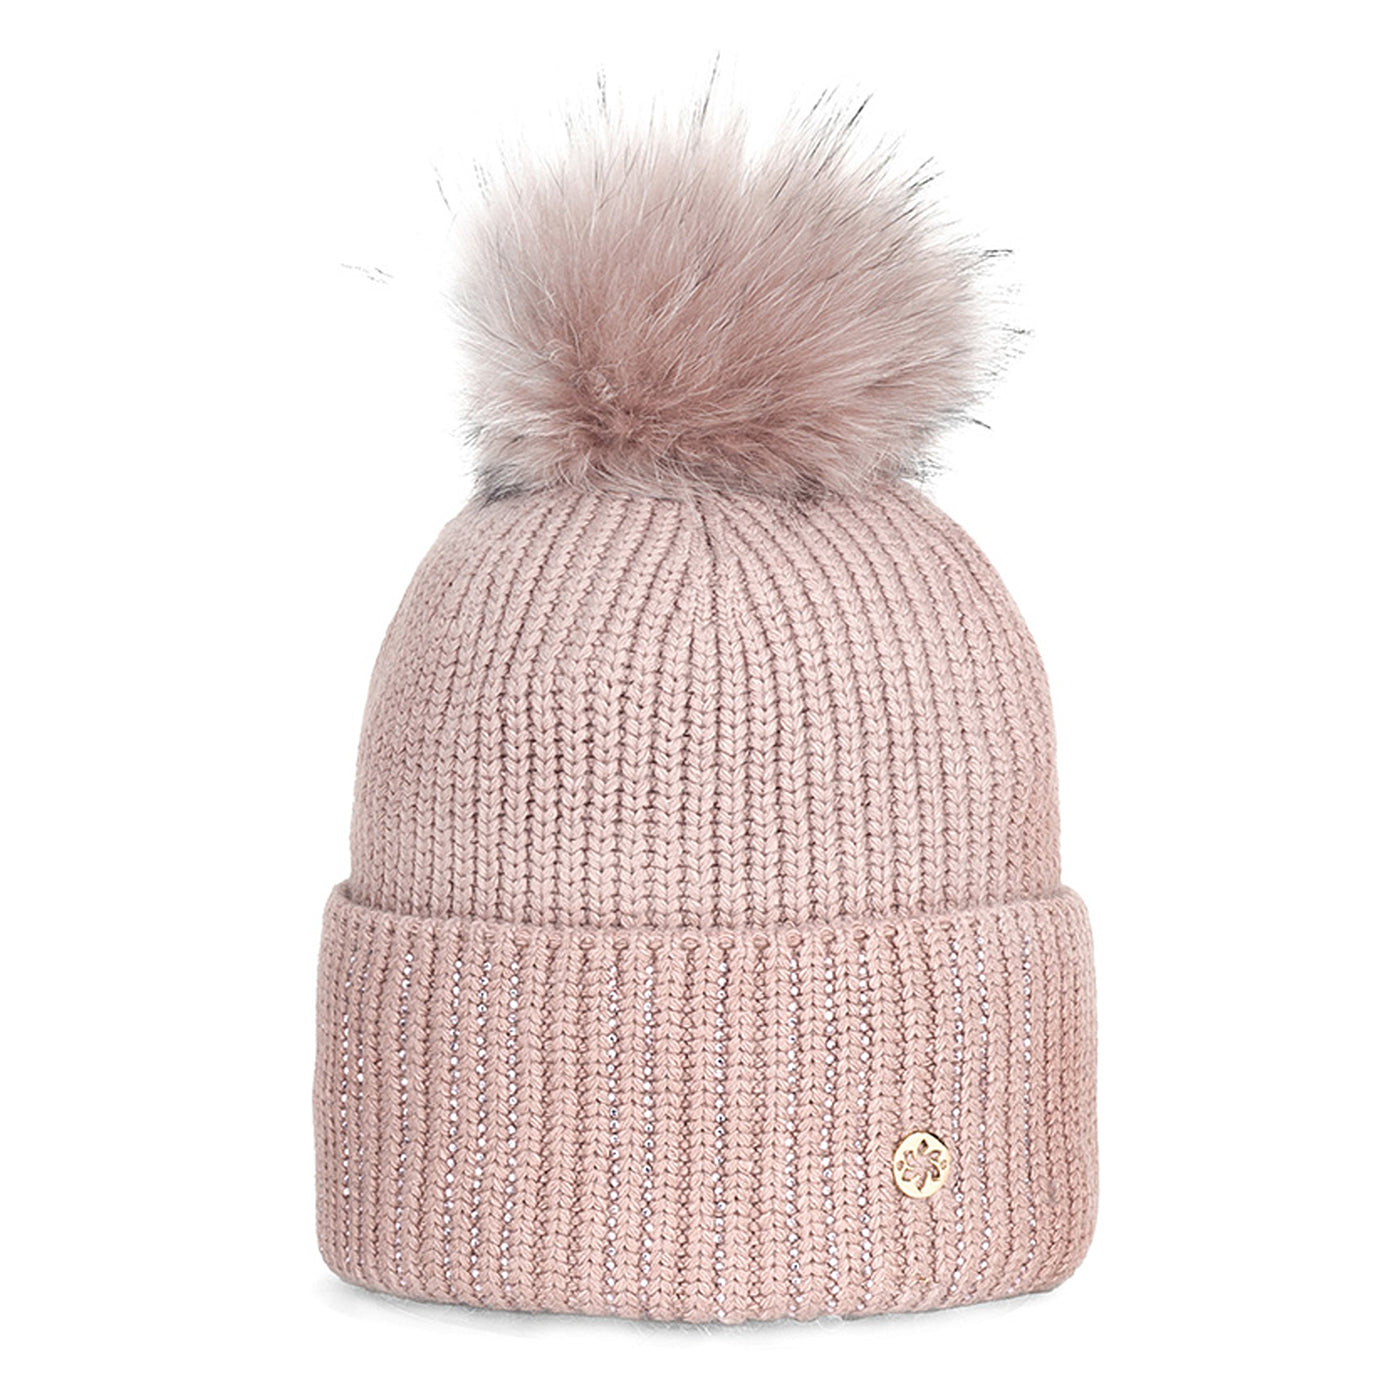 Granadilla Doutey Hat in Pale Pink with Fur Pom Pom